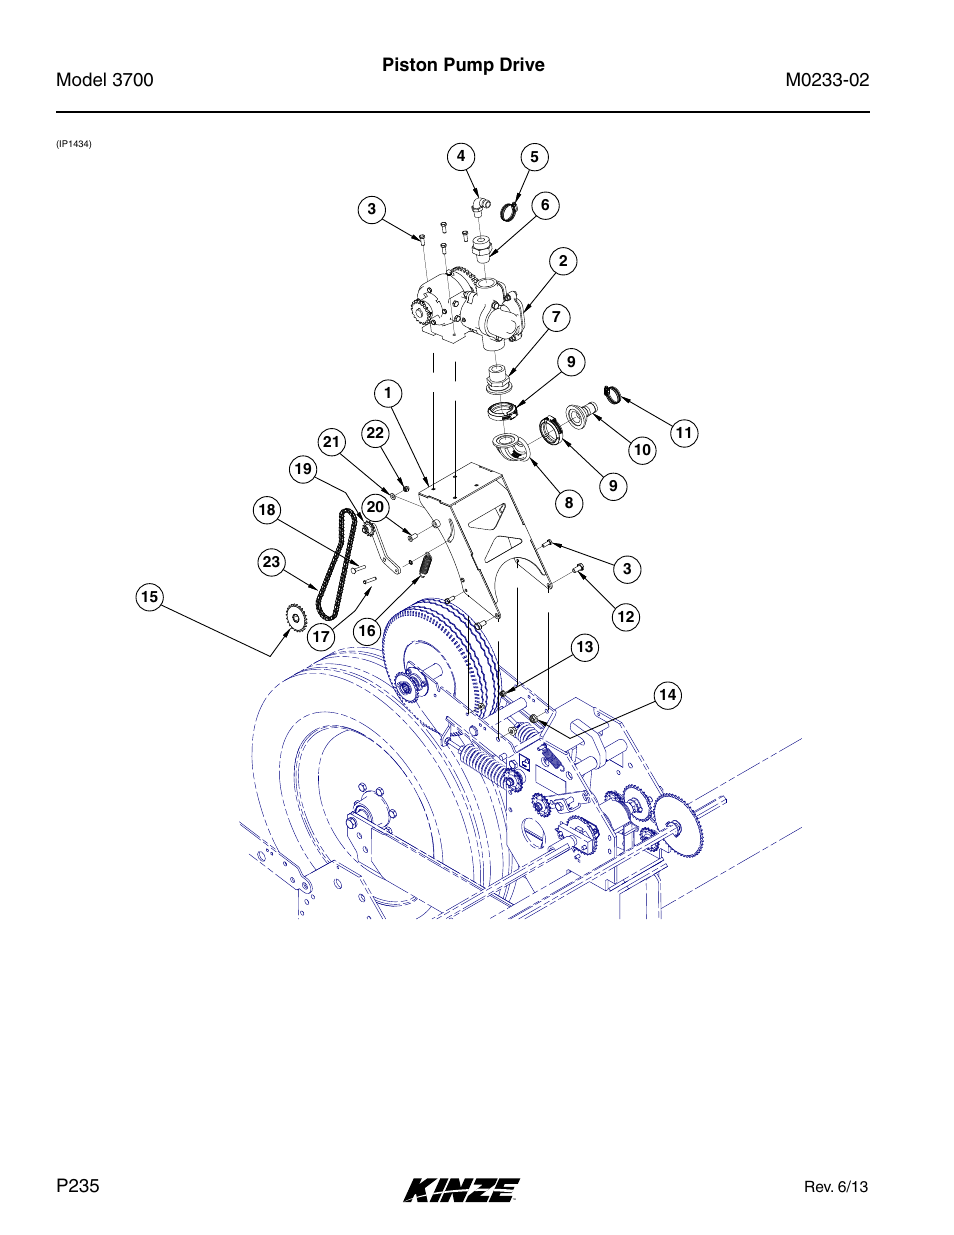 Piston pump drive | Kinze 3700 Front Folding Planter Rev. 6/14 User Manual | Page 238 / 284